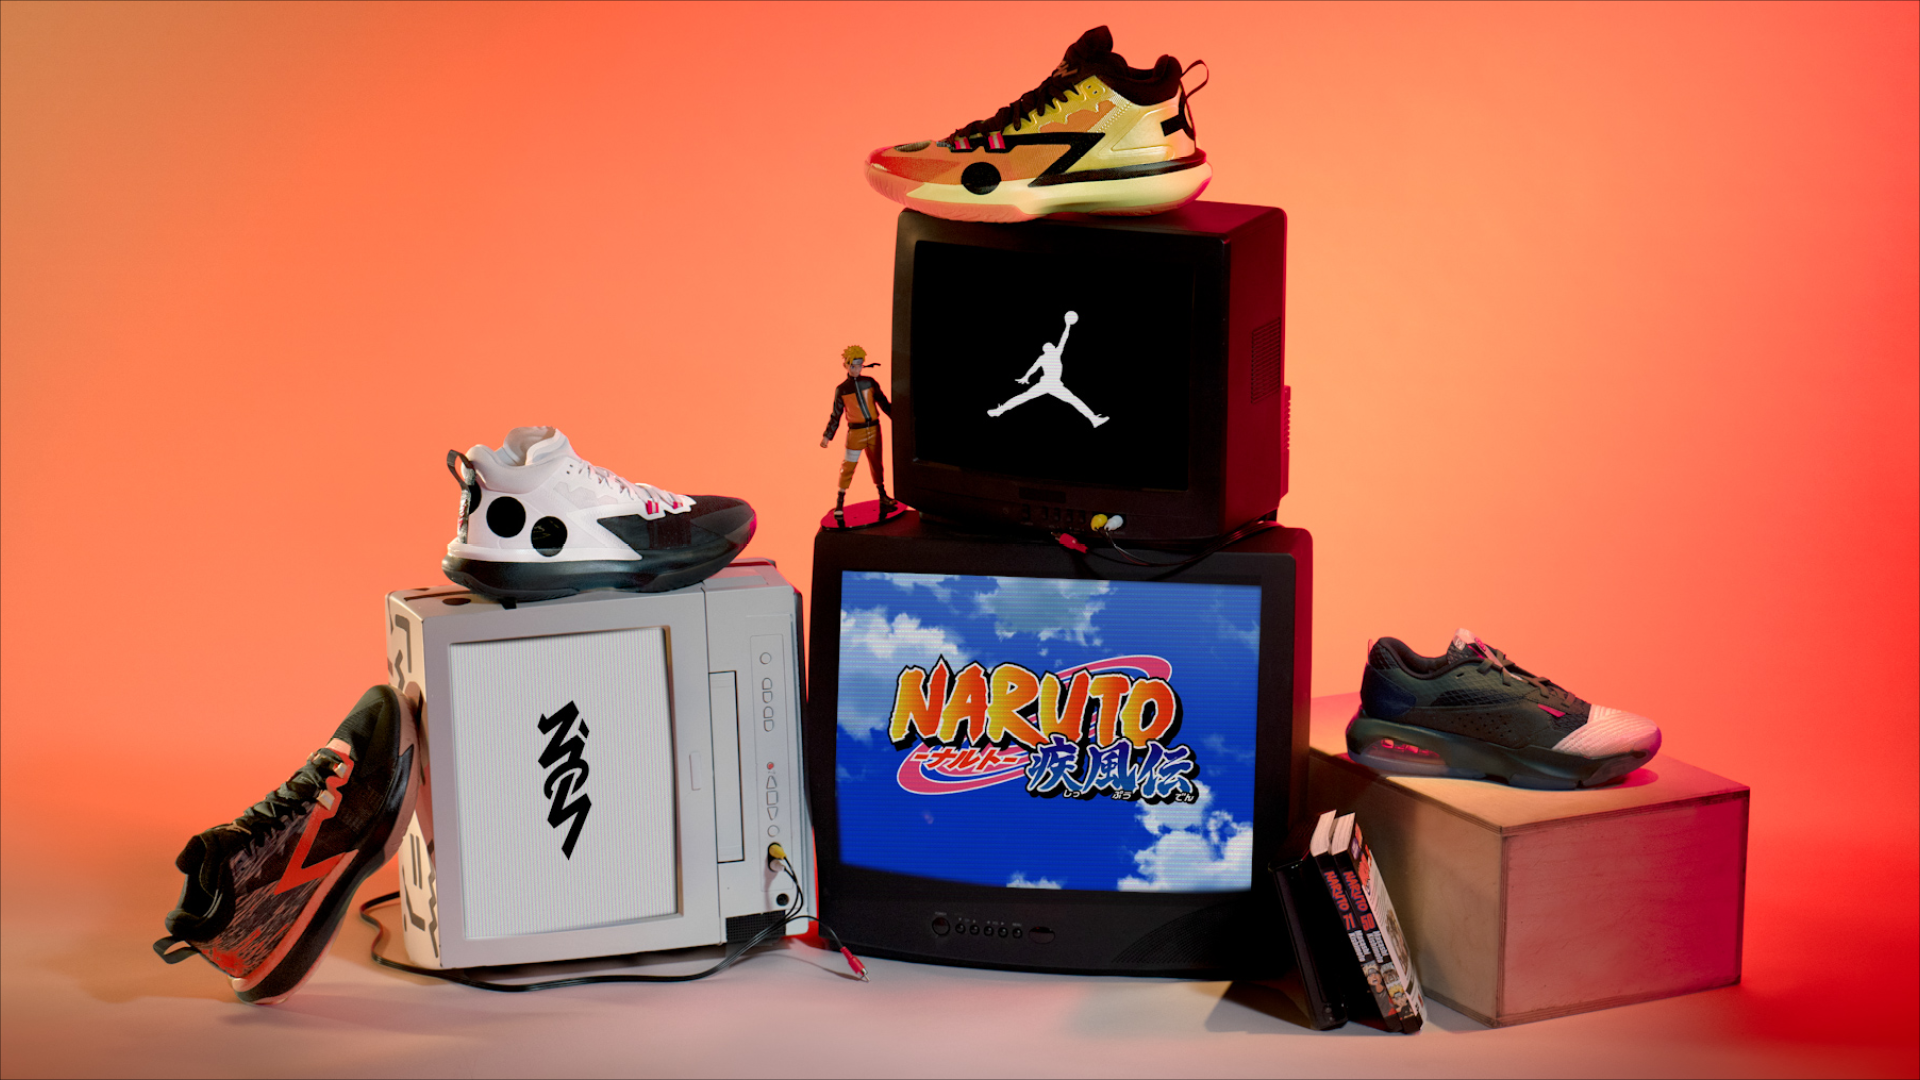 VIZ Media’s collaboration with Nike for “Naruto